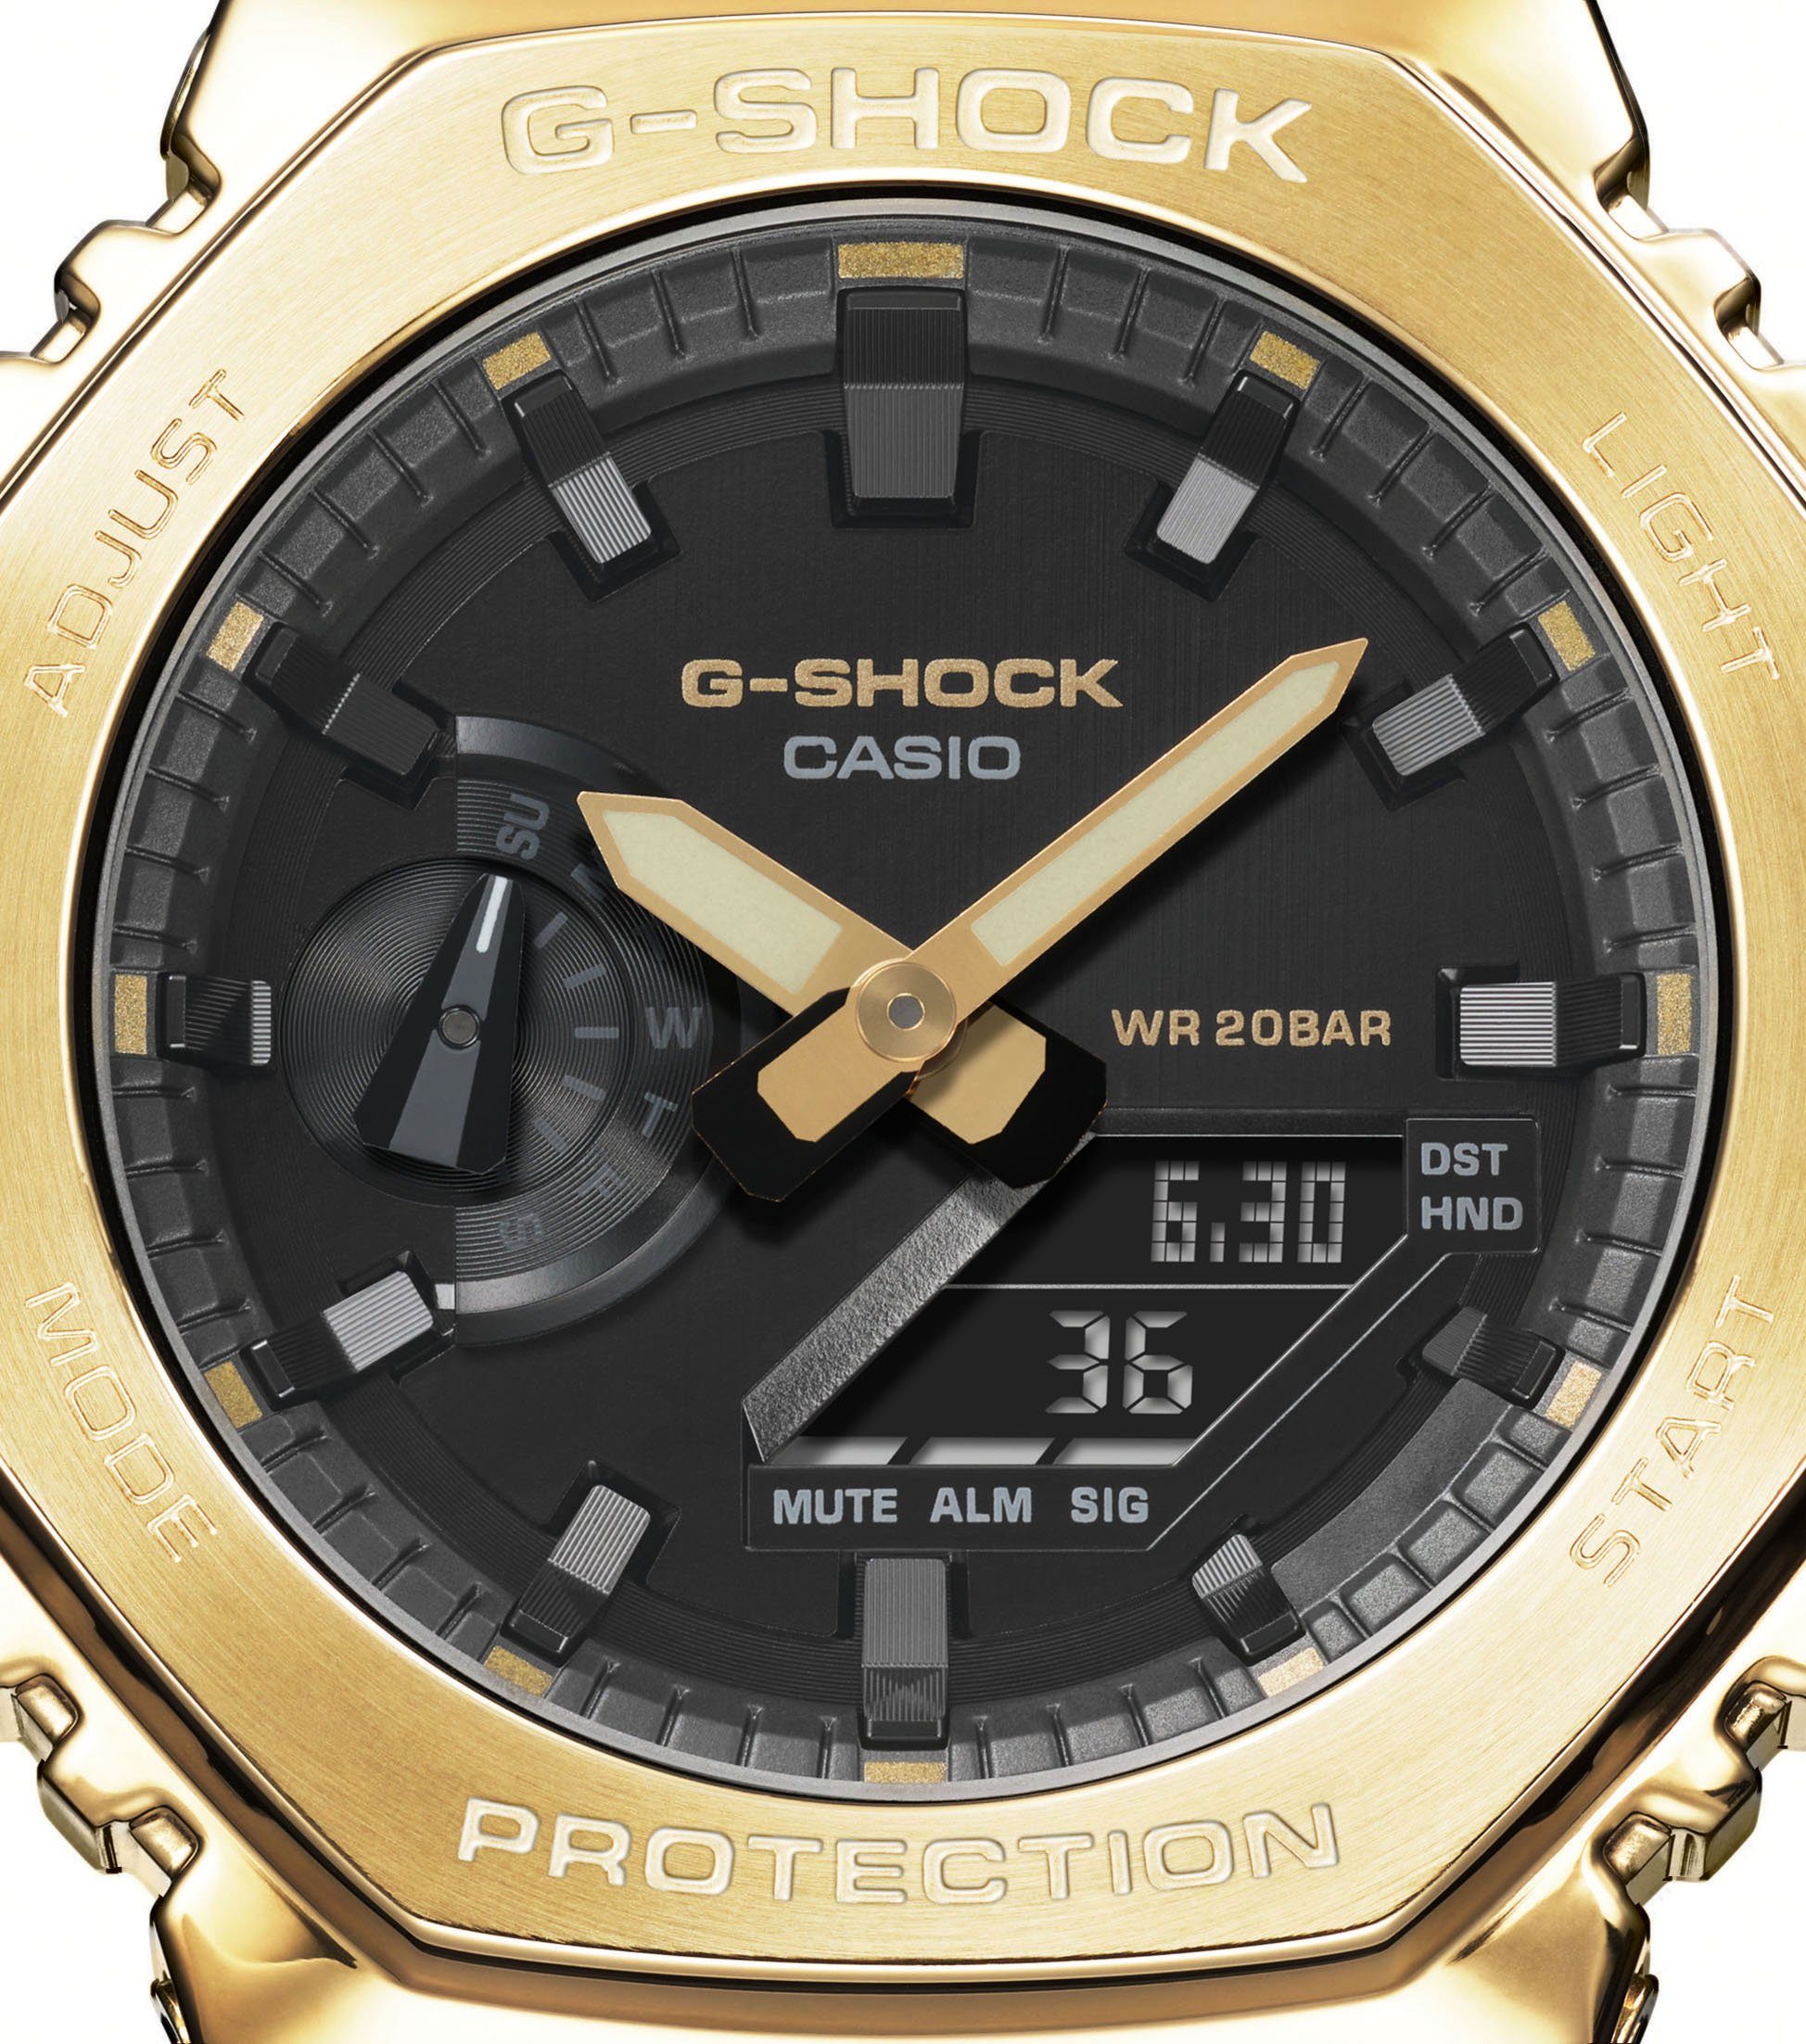 GM-2100G-1A9ER CASIO Chronograph G-SHOCK